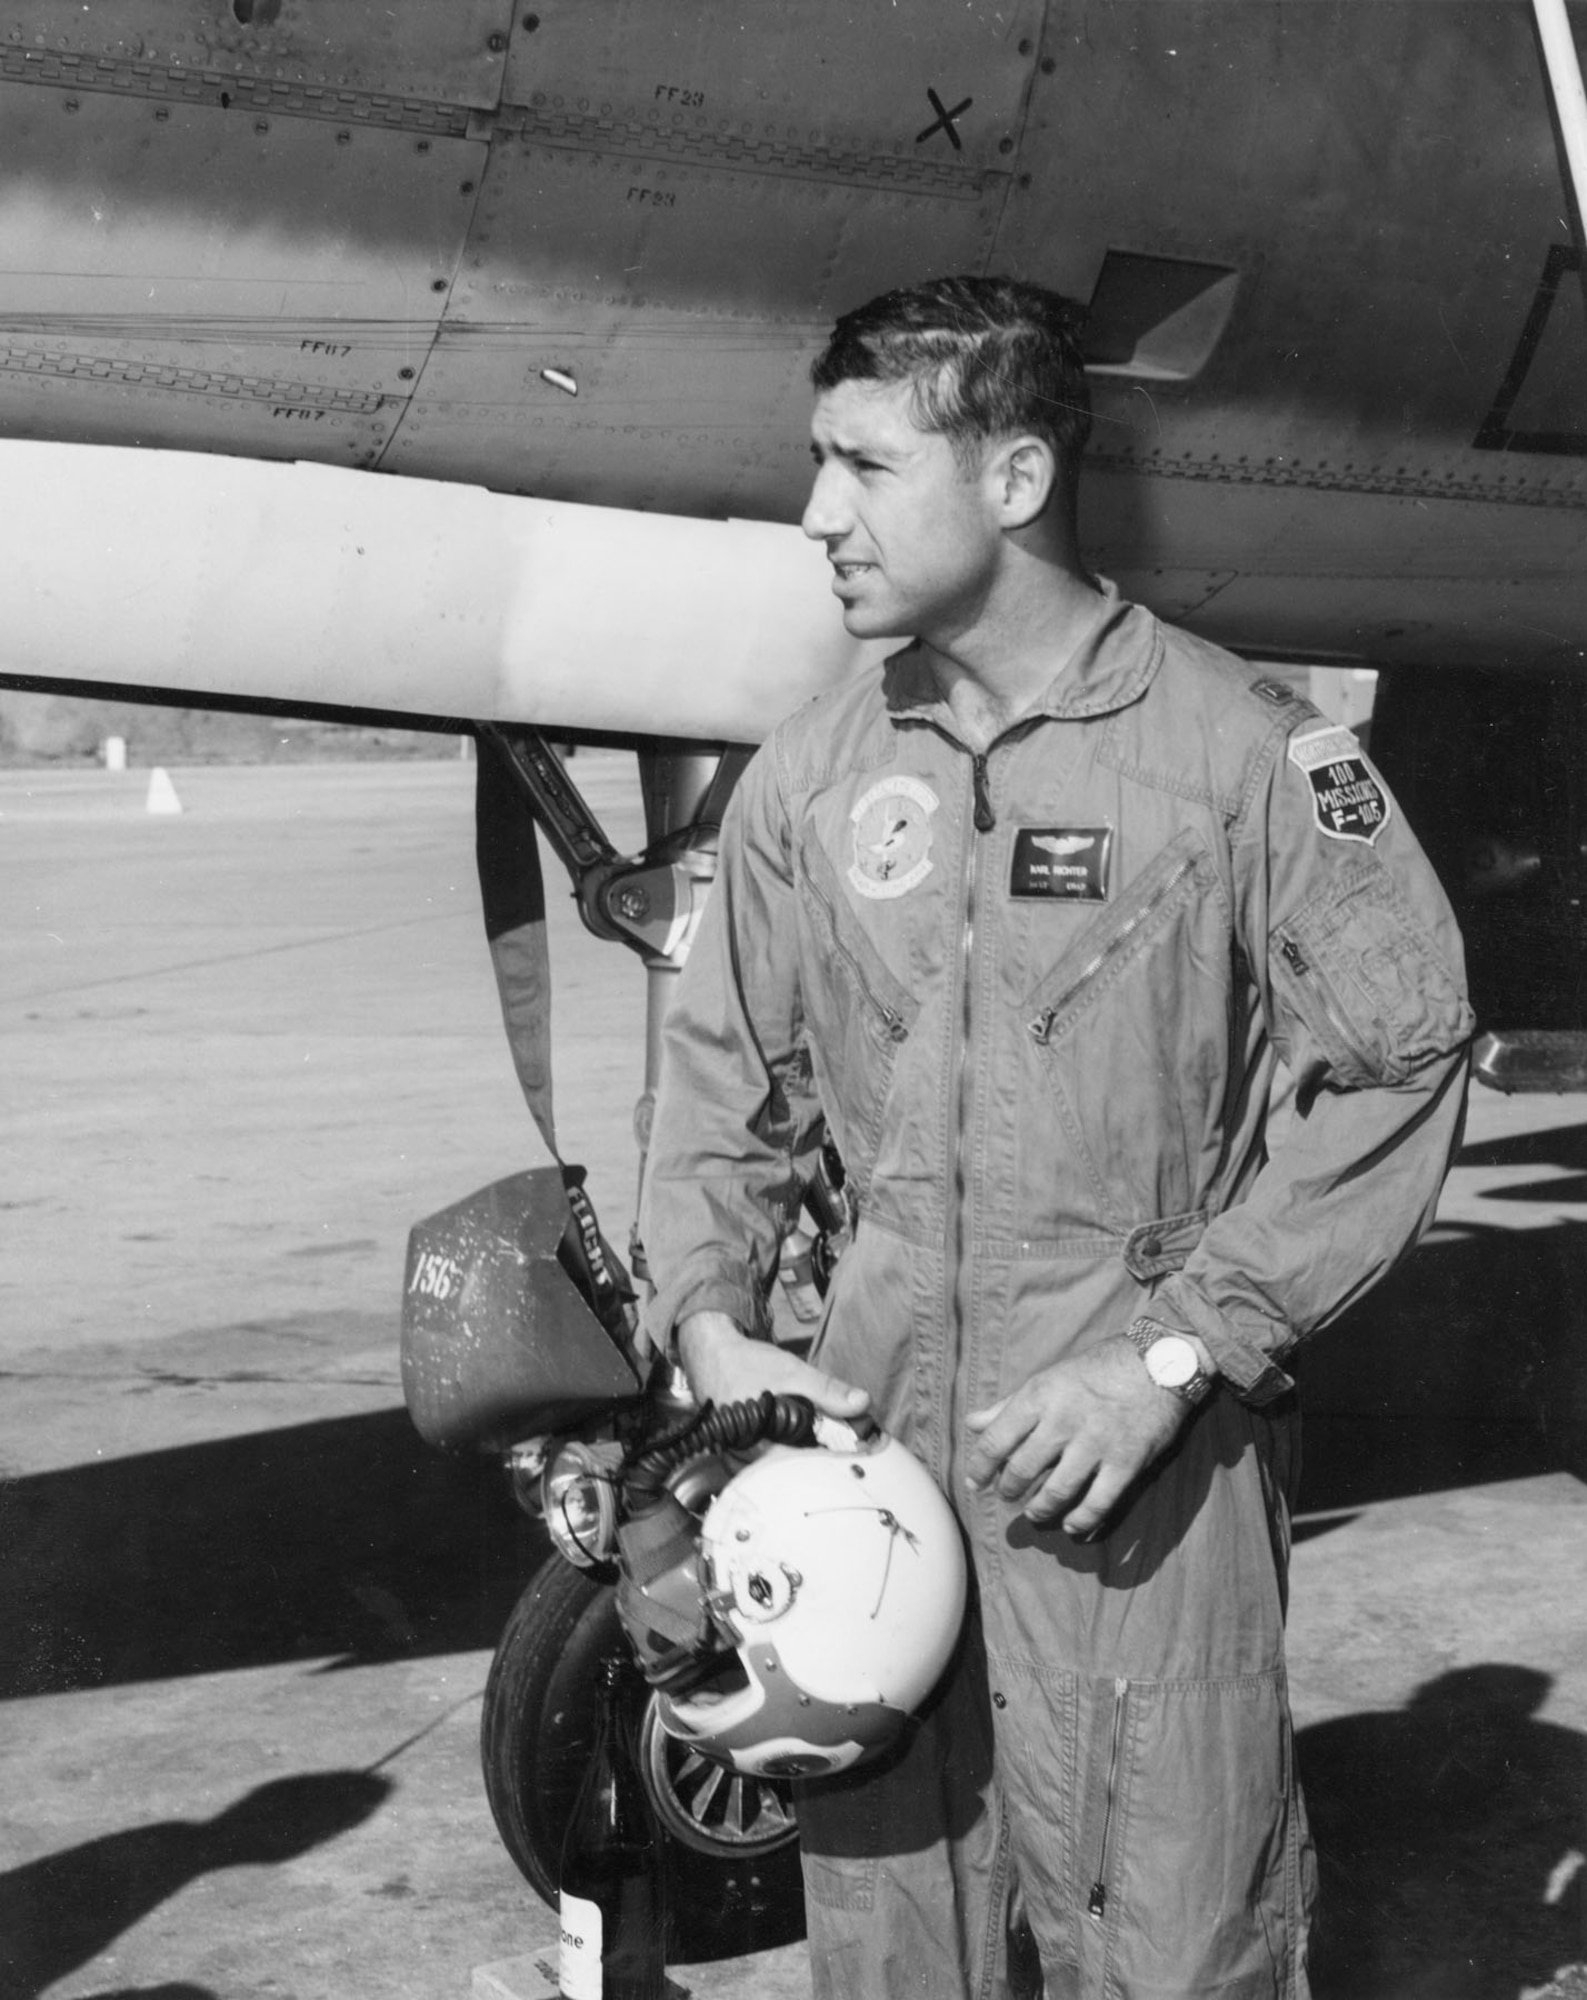 Lt. Richter wearing a 100 mission patch. (U.S. Air Force photo)